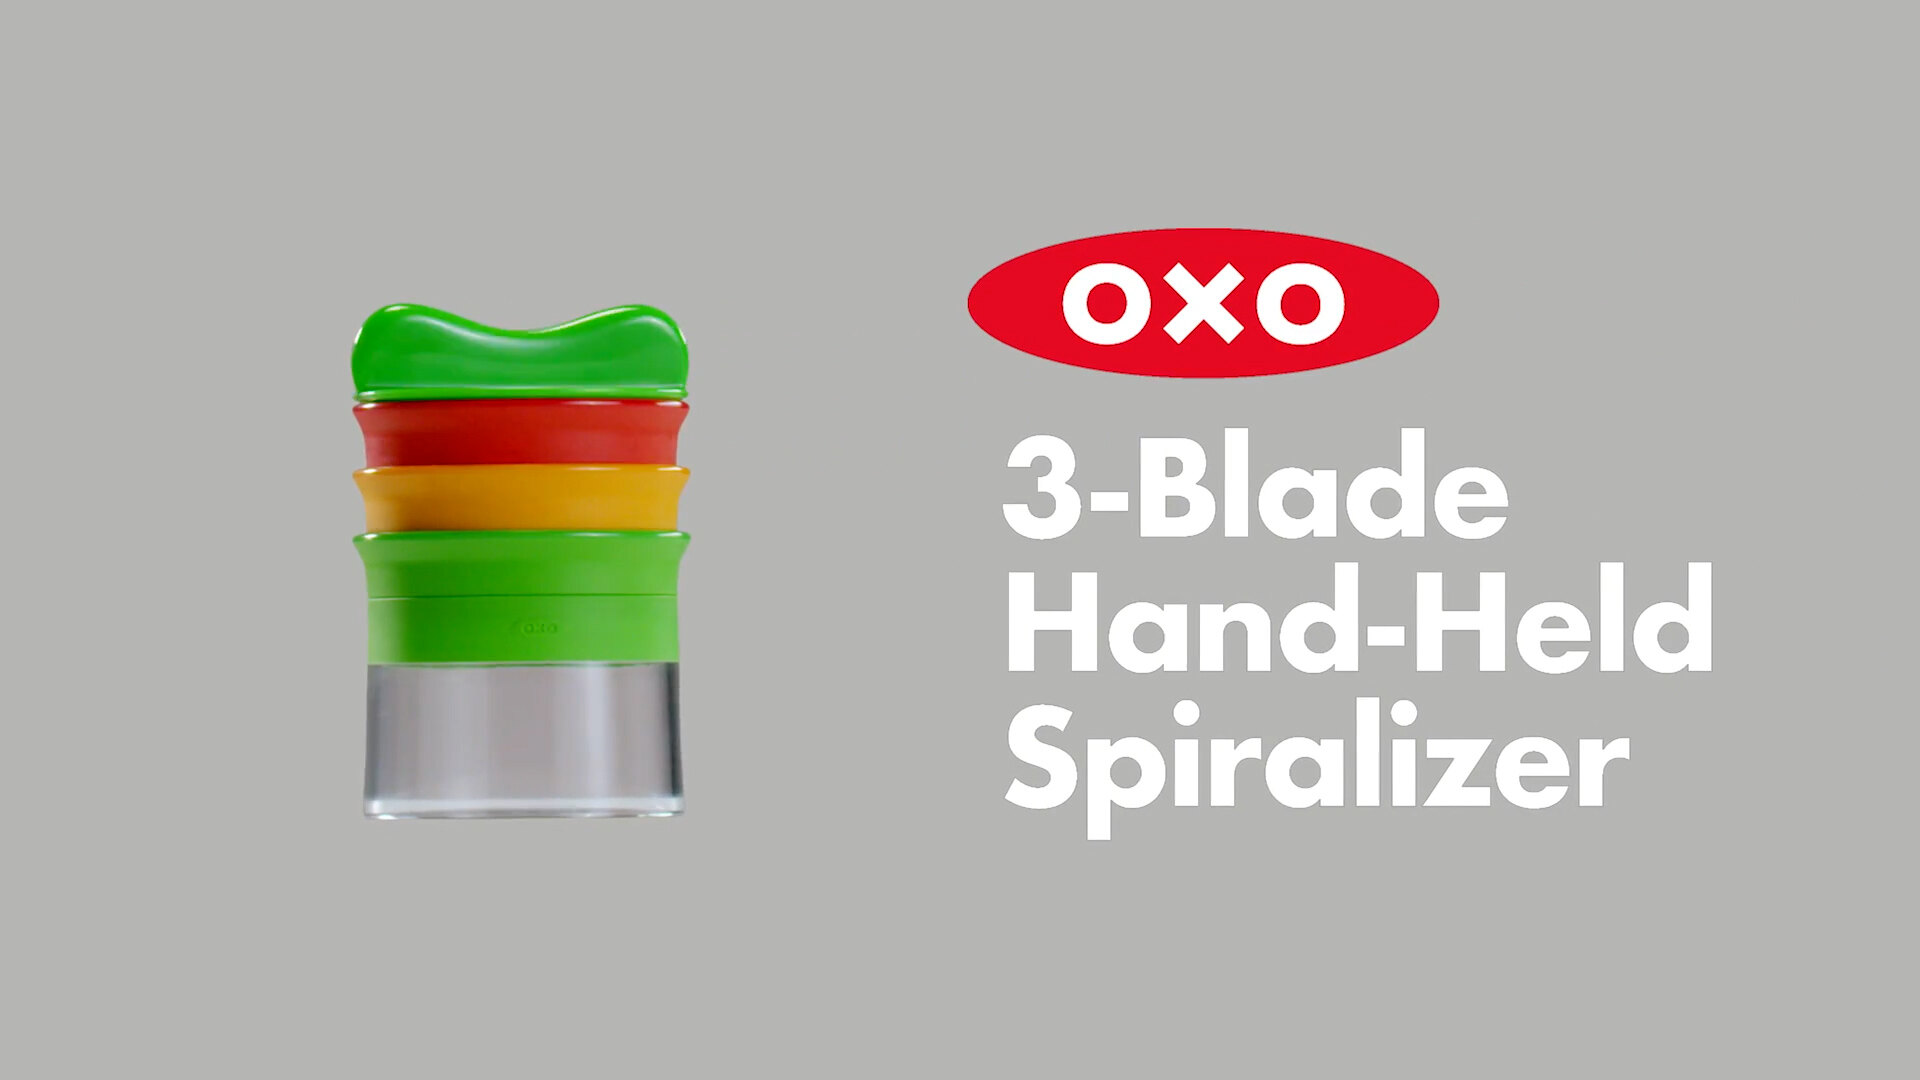 OXO Good Grips 3-Blade Hand-Held Spiralizer, Green, Red, & Orange